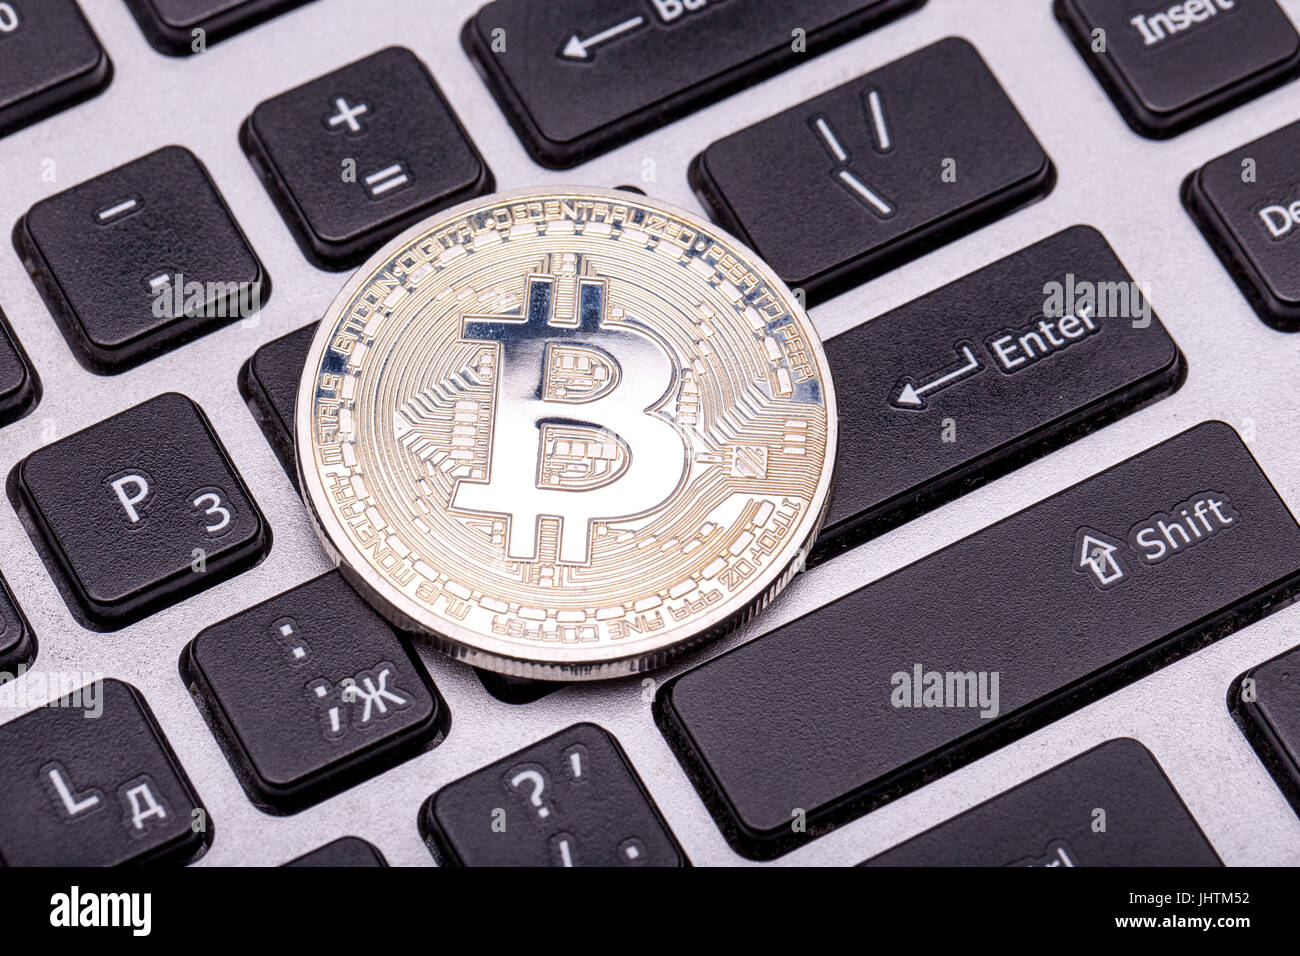 silver bitcoin on keyboard Stock Photo